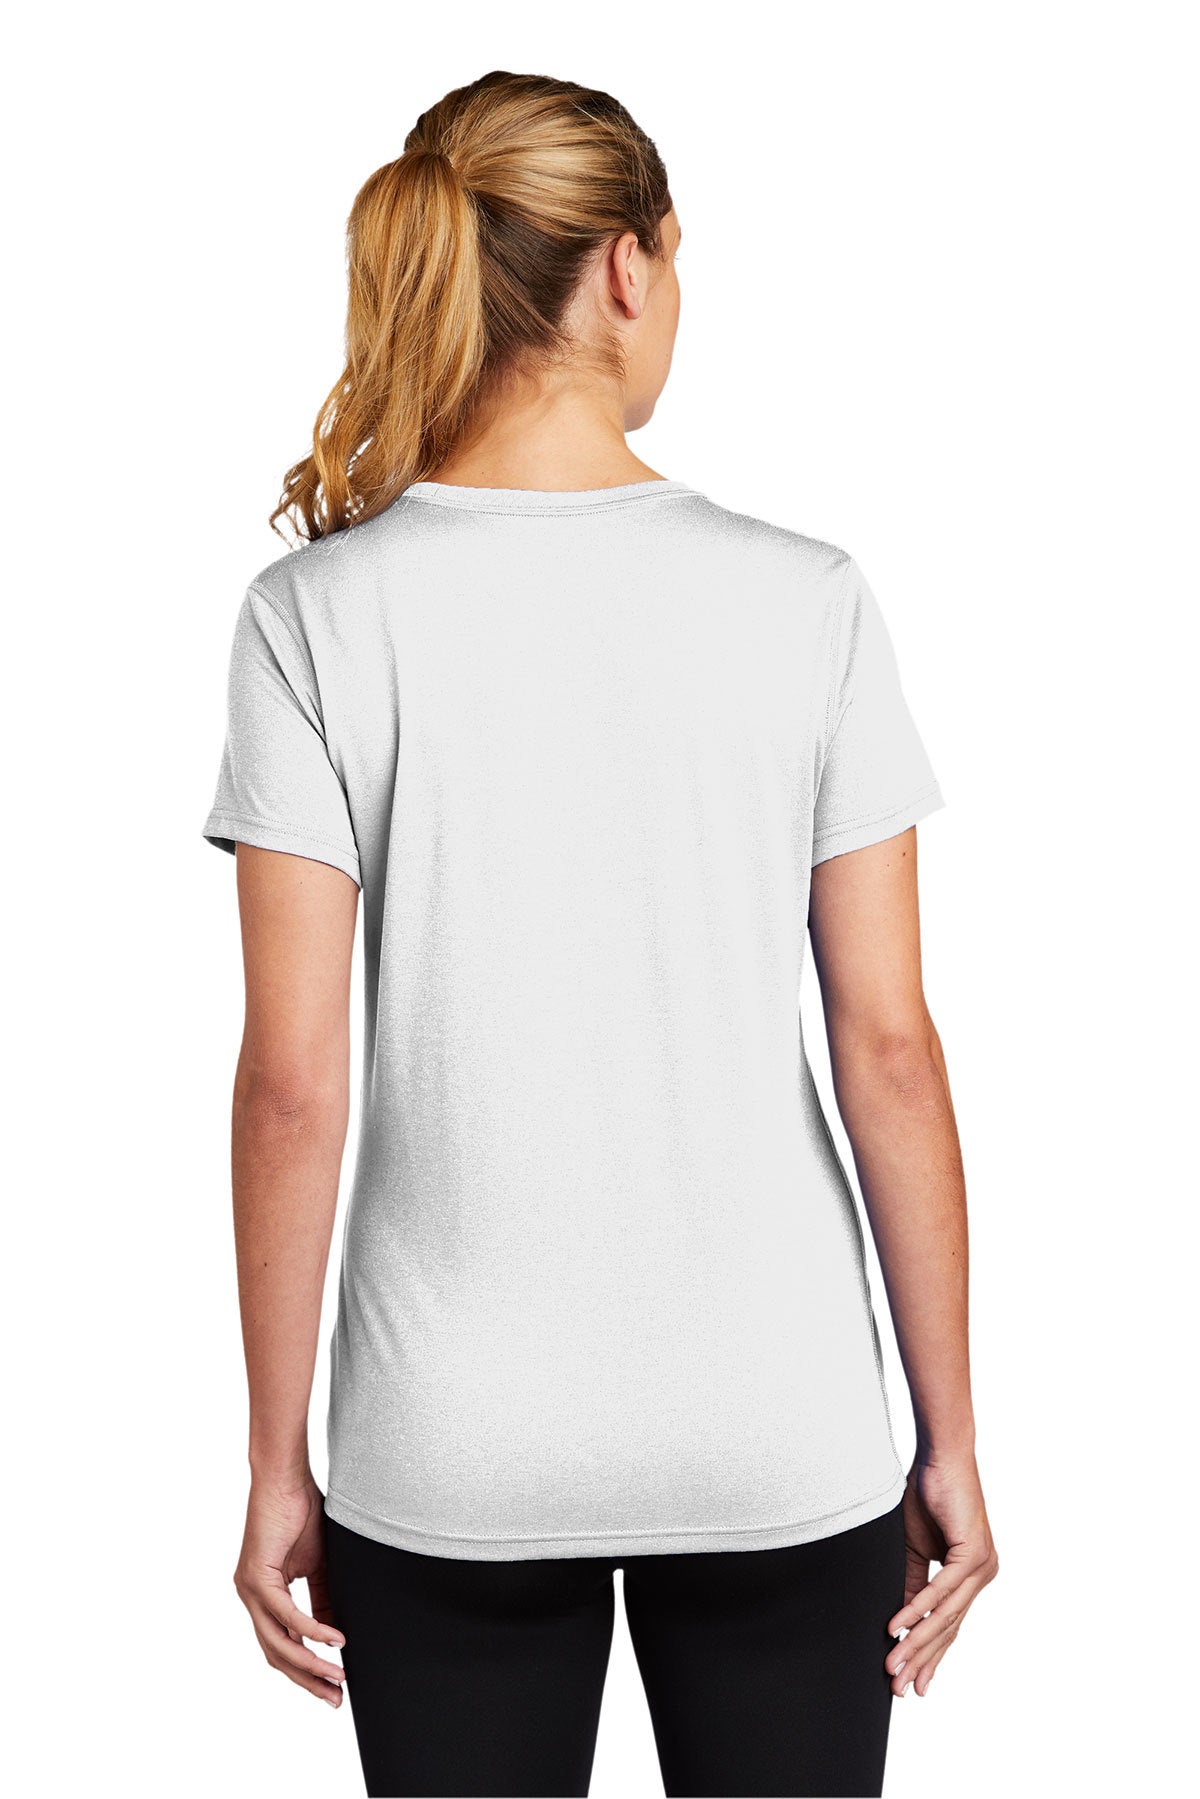 Nike Ladies Legend Customized T-Shirts, White